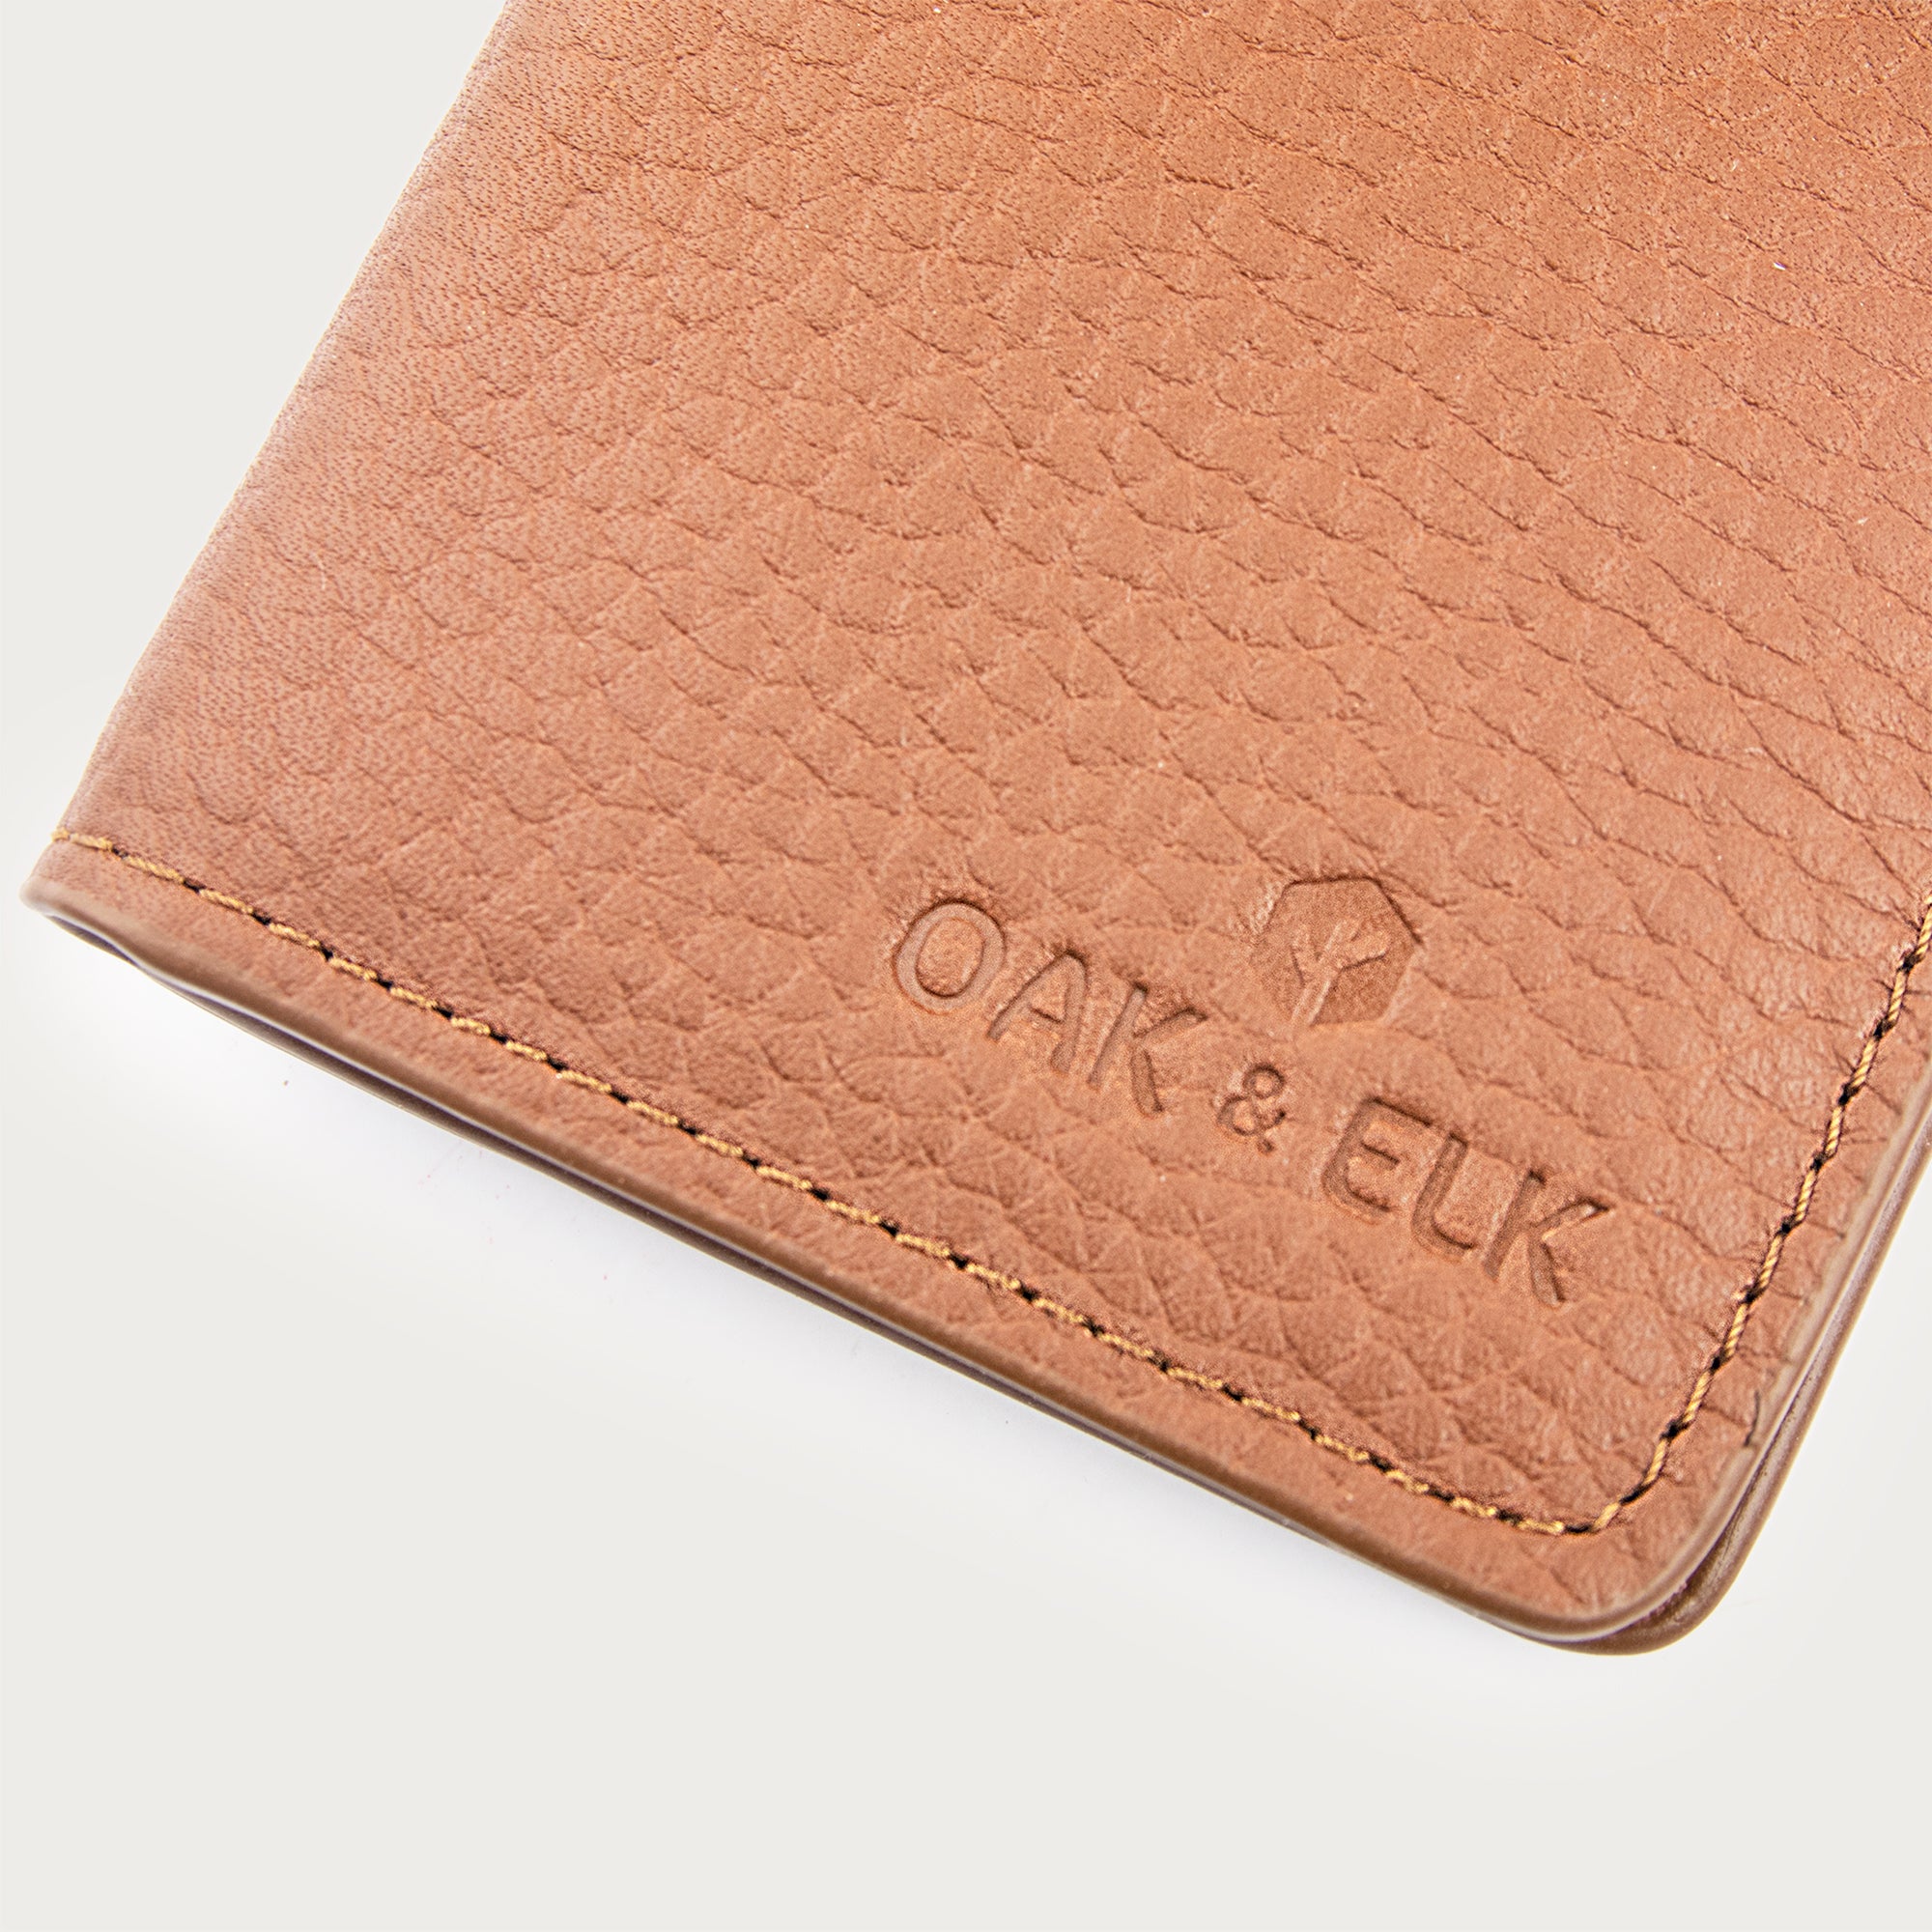 Pocket Organizer - Oak & Honey Leather Goods